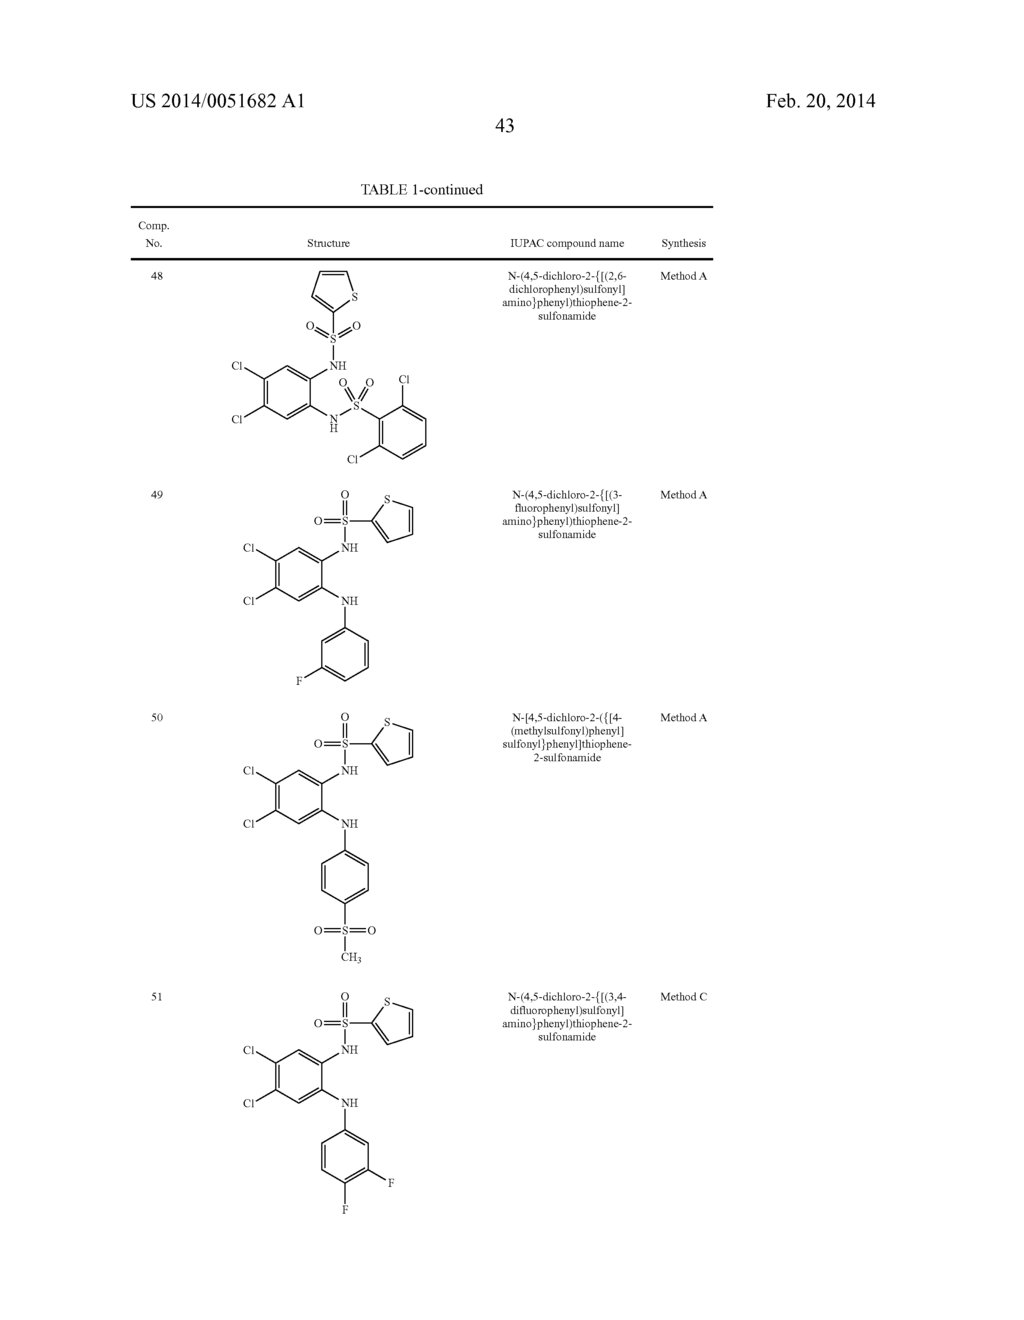 NOVEL 1,2- BIS-SULFONAMIDE DERIVATIVES AS CHEMOKINE RECEPTOR MODULATORS - diagram, schematic, and image 44